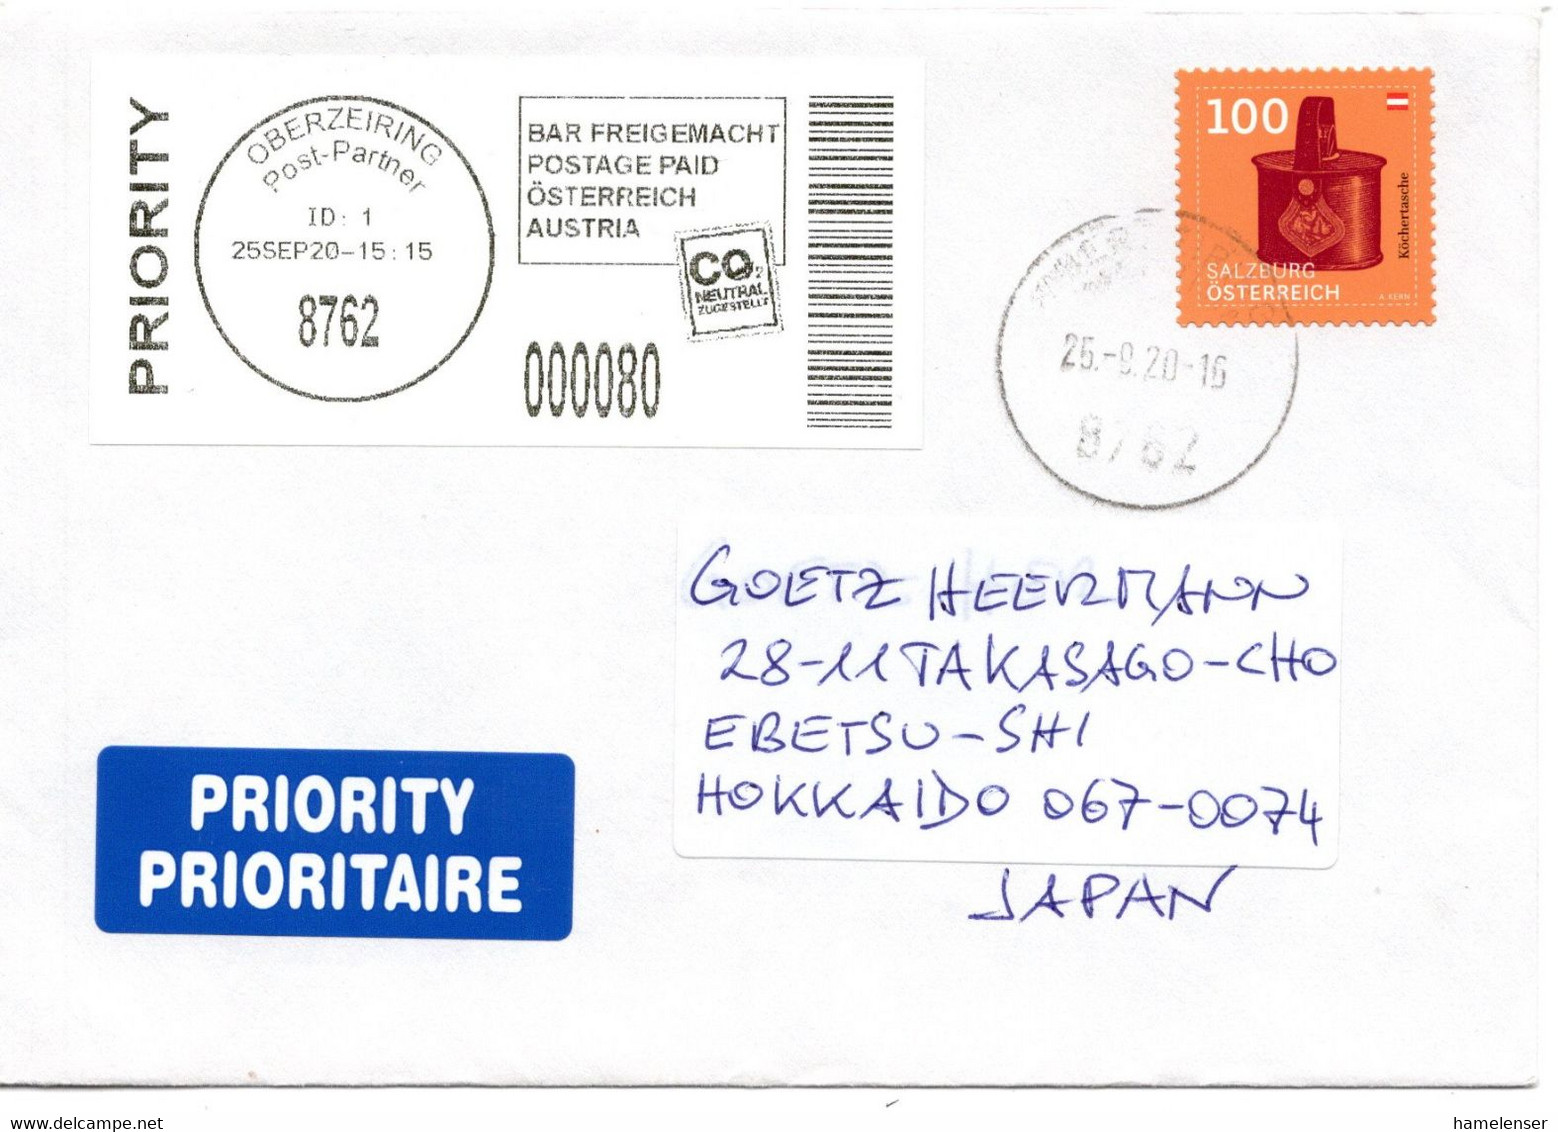 59244 - Österreich - 2020 - 100c Koechertasche MiF A LpBf OBERZEIRING POST-PARTNER -> Japan - Storia Postale